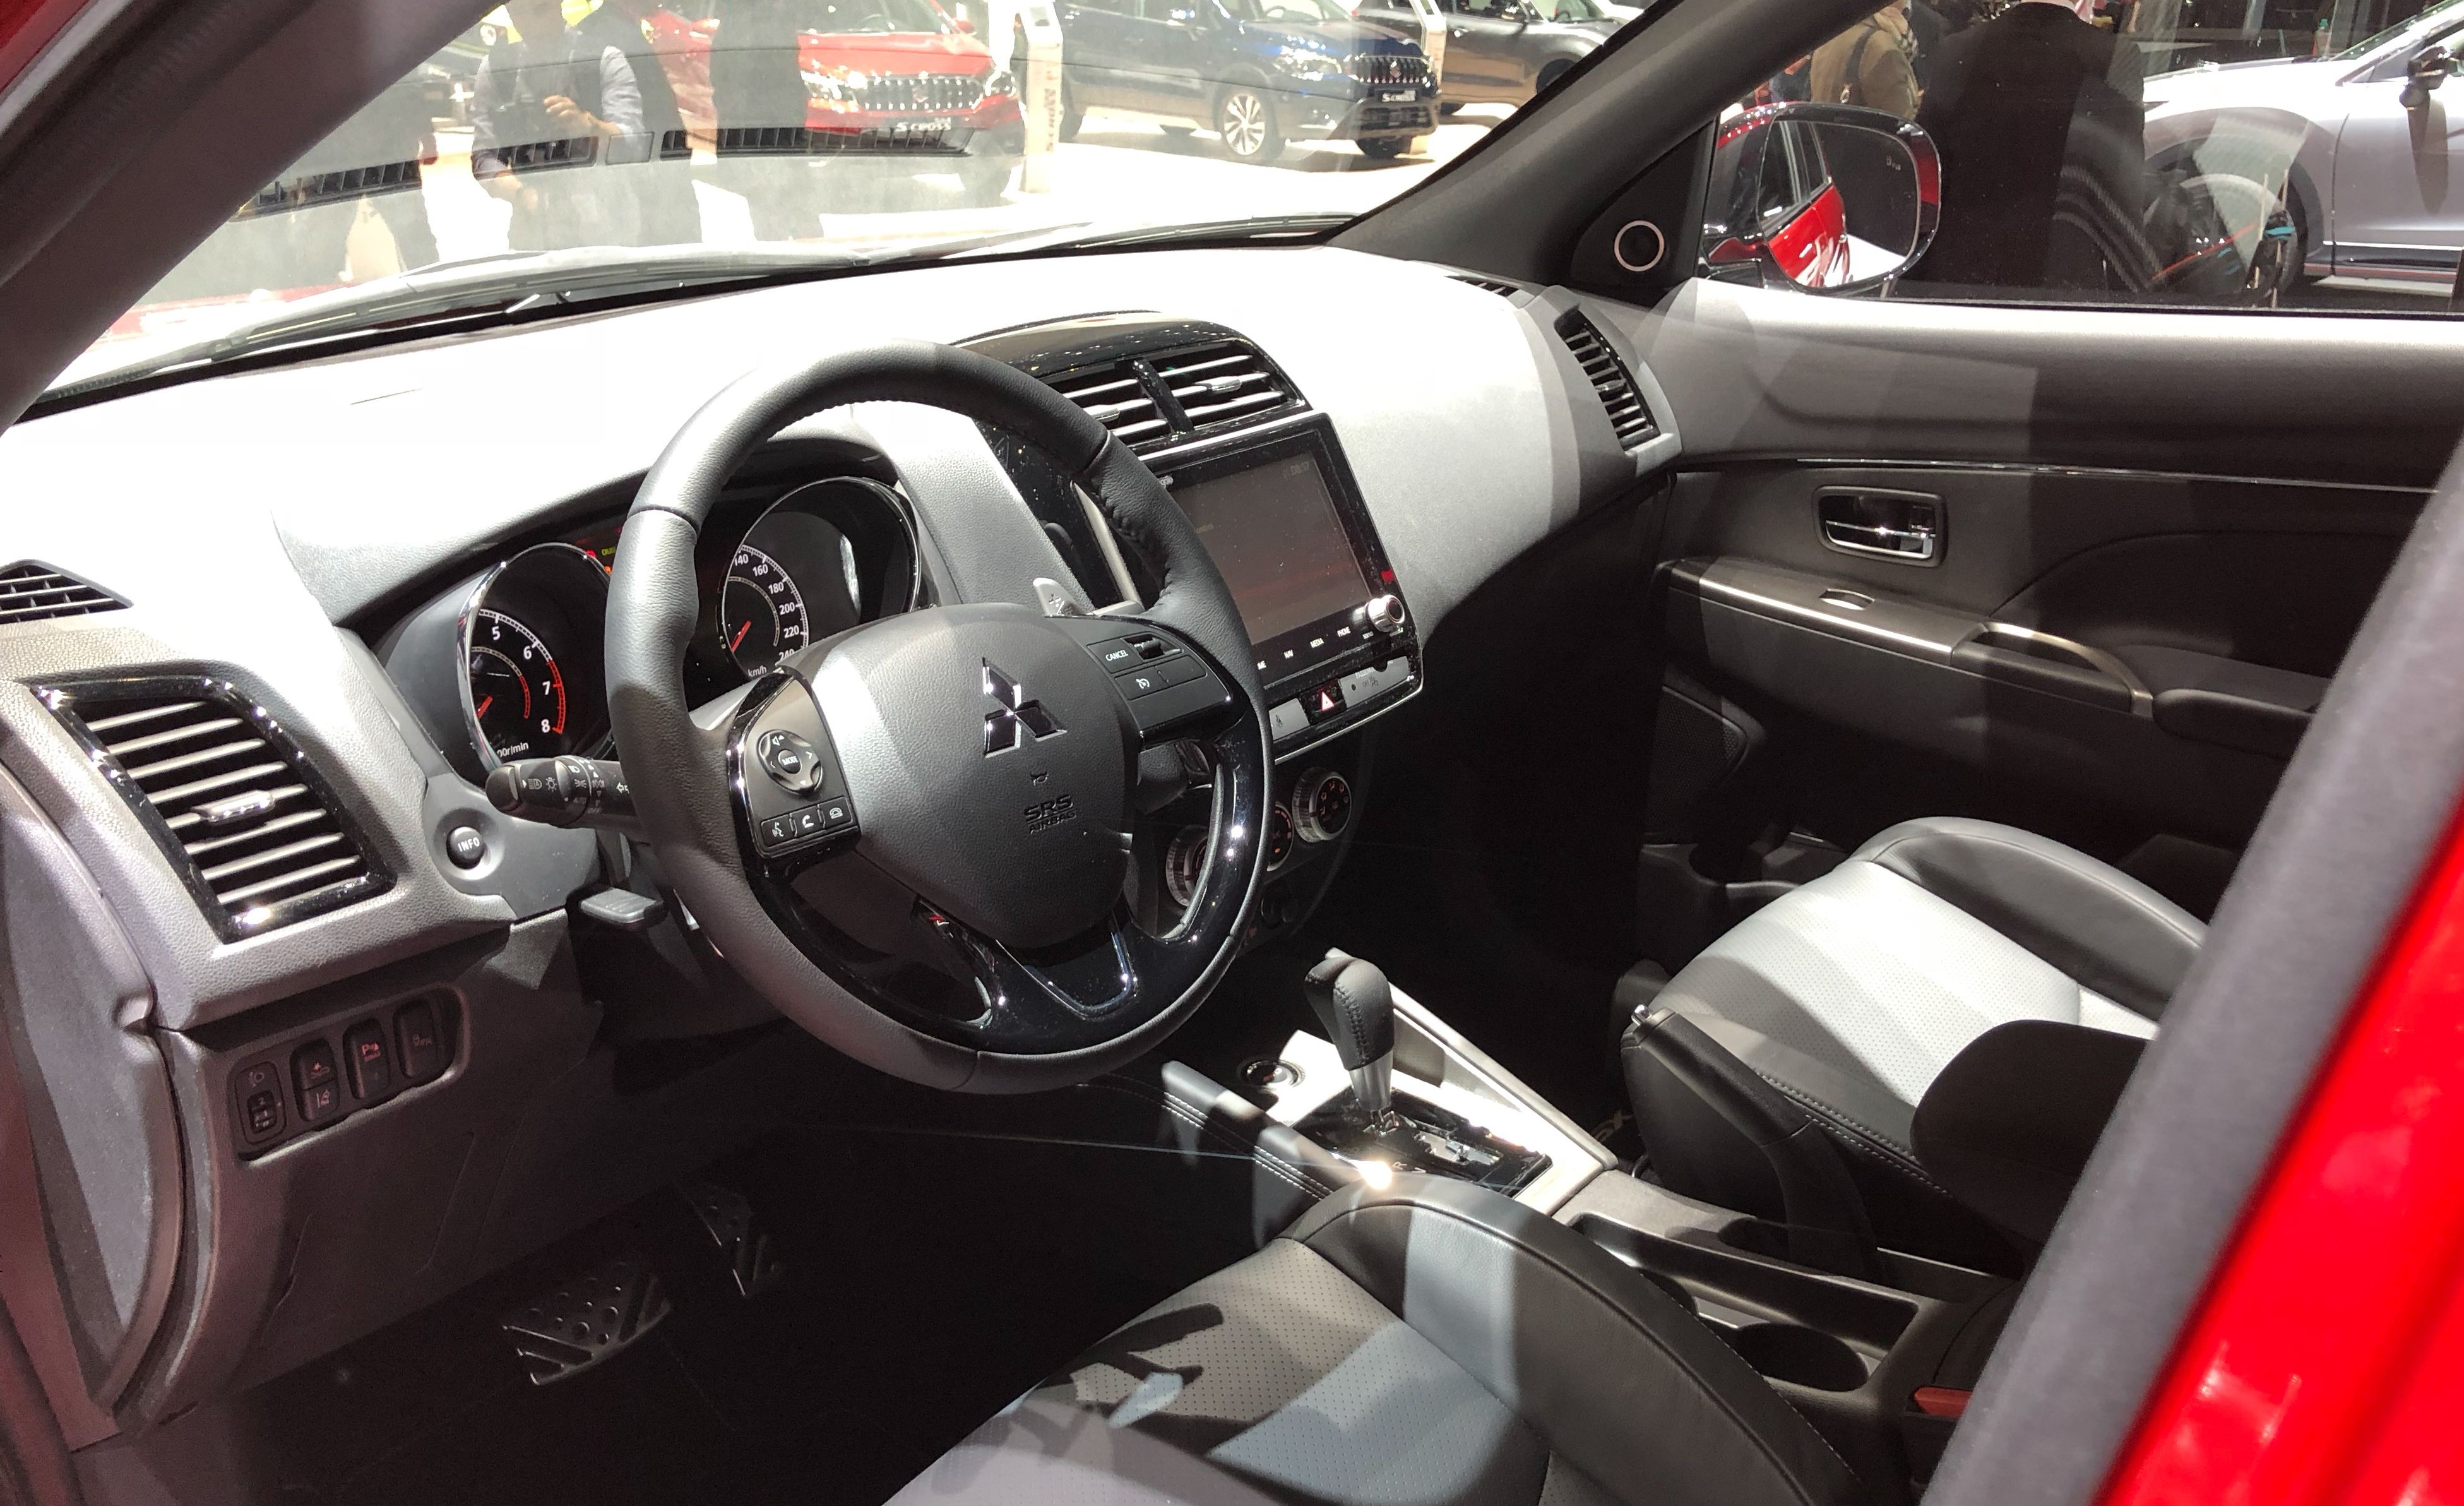 2020 Mitsubishi Outlander Sport refreshed again - Autoblog